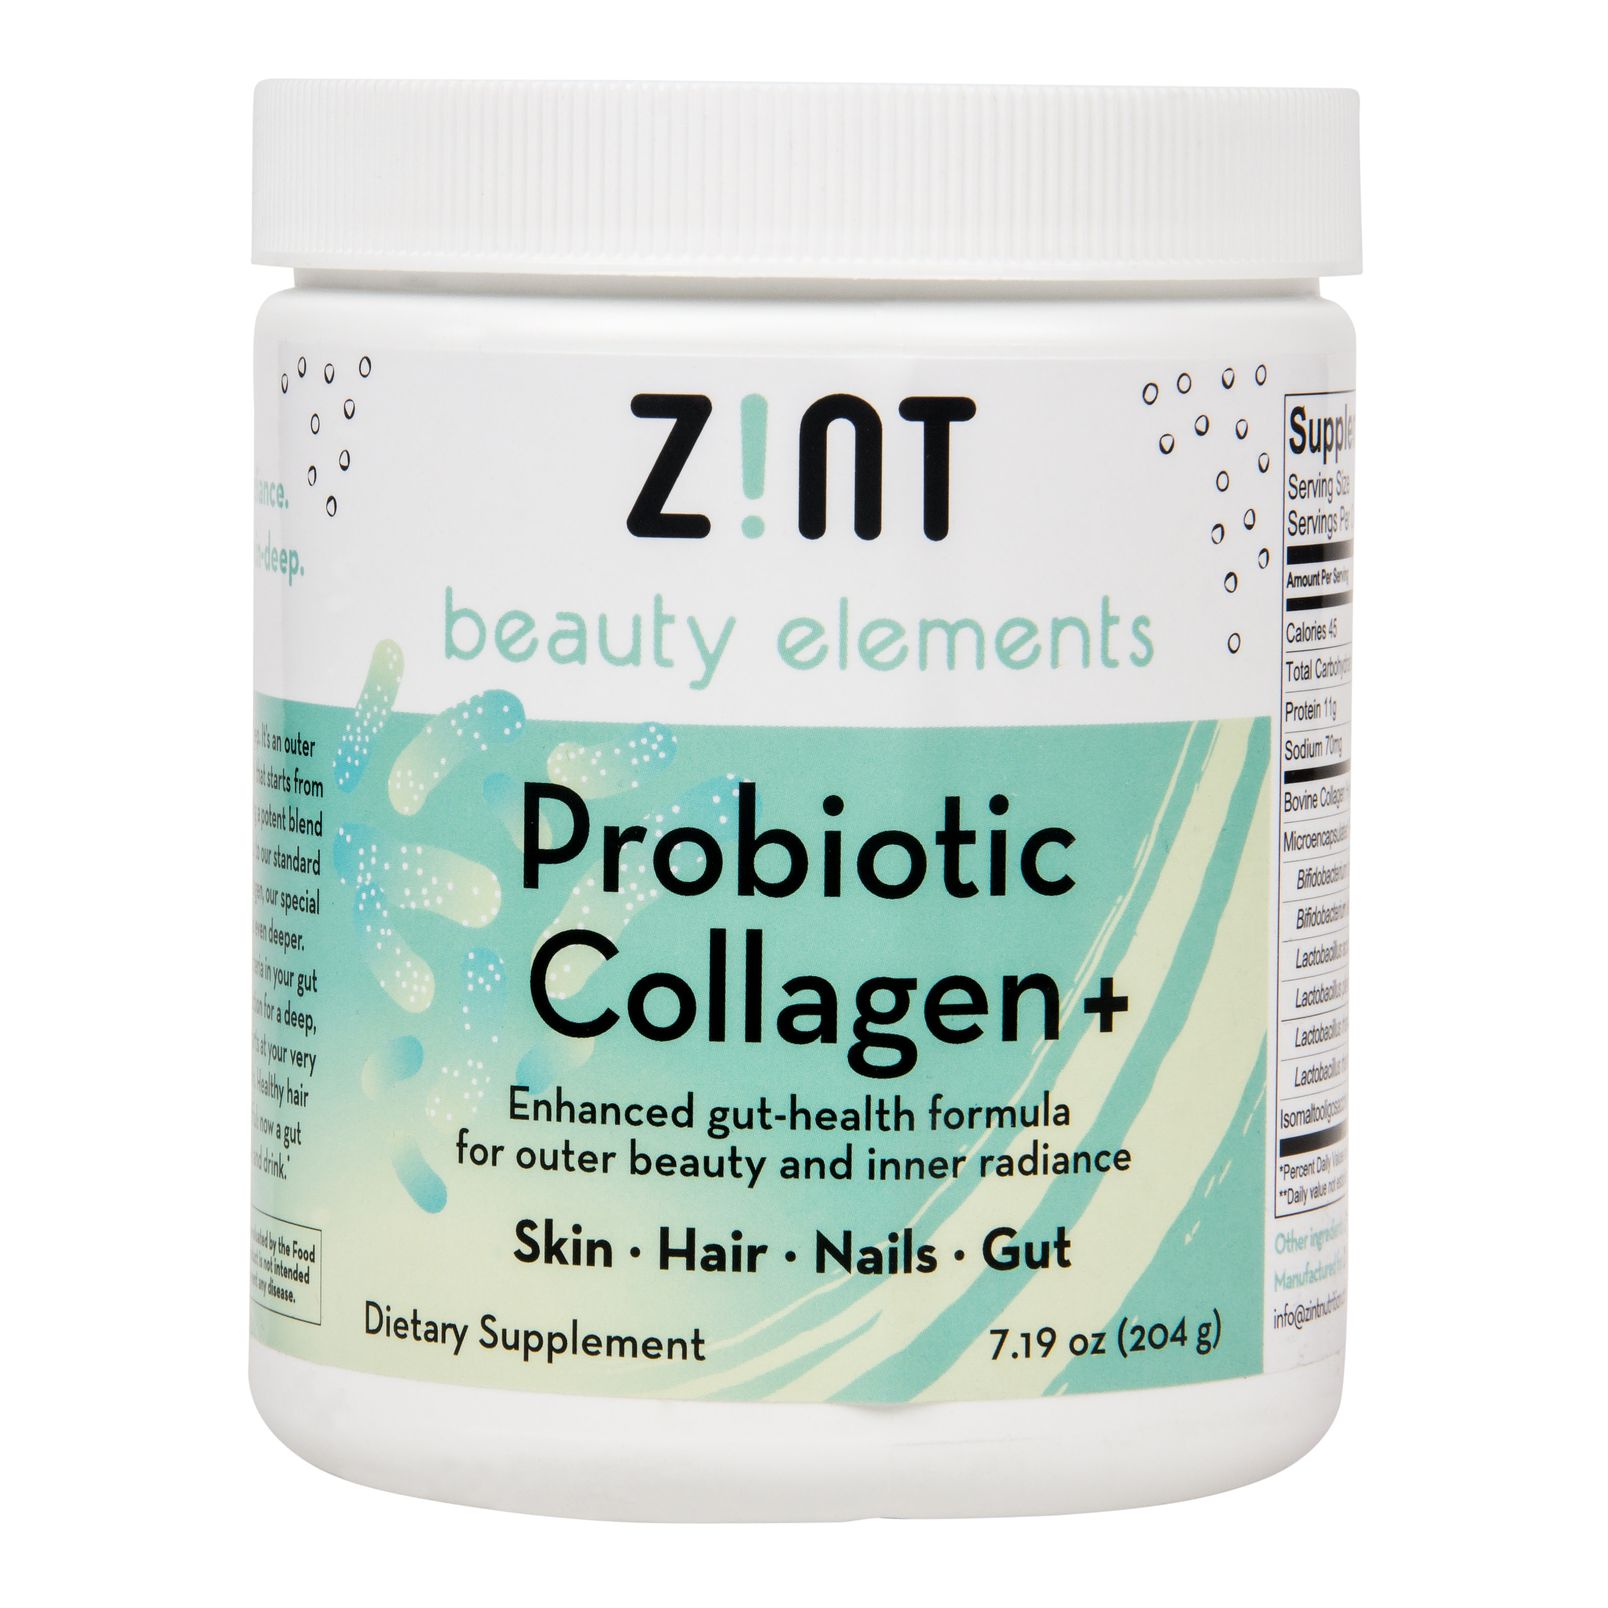 Новый коллаген. Probiotic Collagen +, for Skin, hair, Nails, gut, Zint, 7.19 oz, 204 g. Коллаген бычий айхерб. Zint Beauty elements.